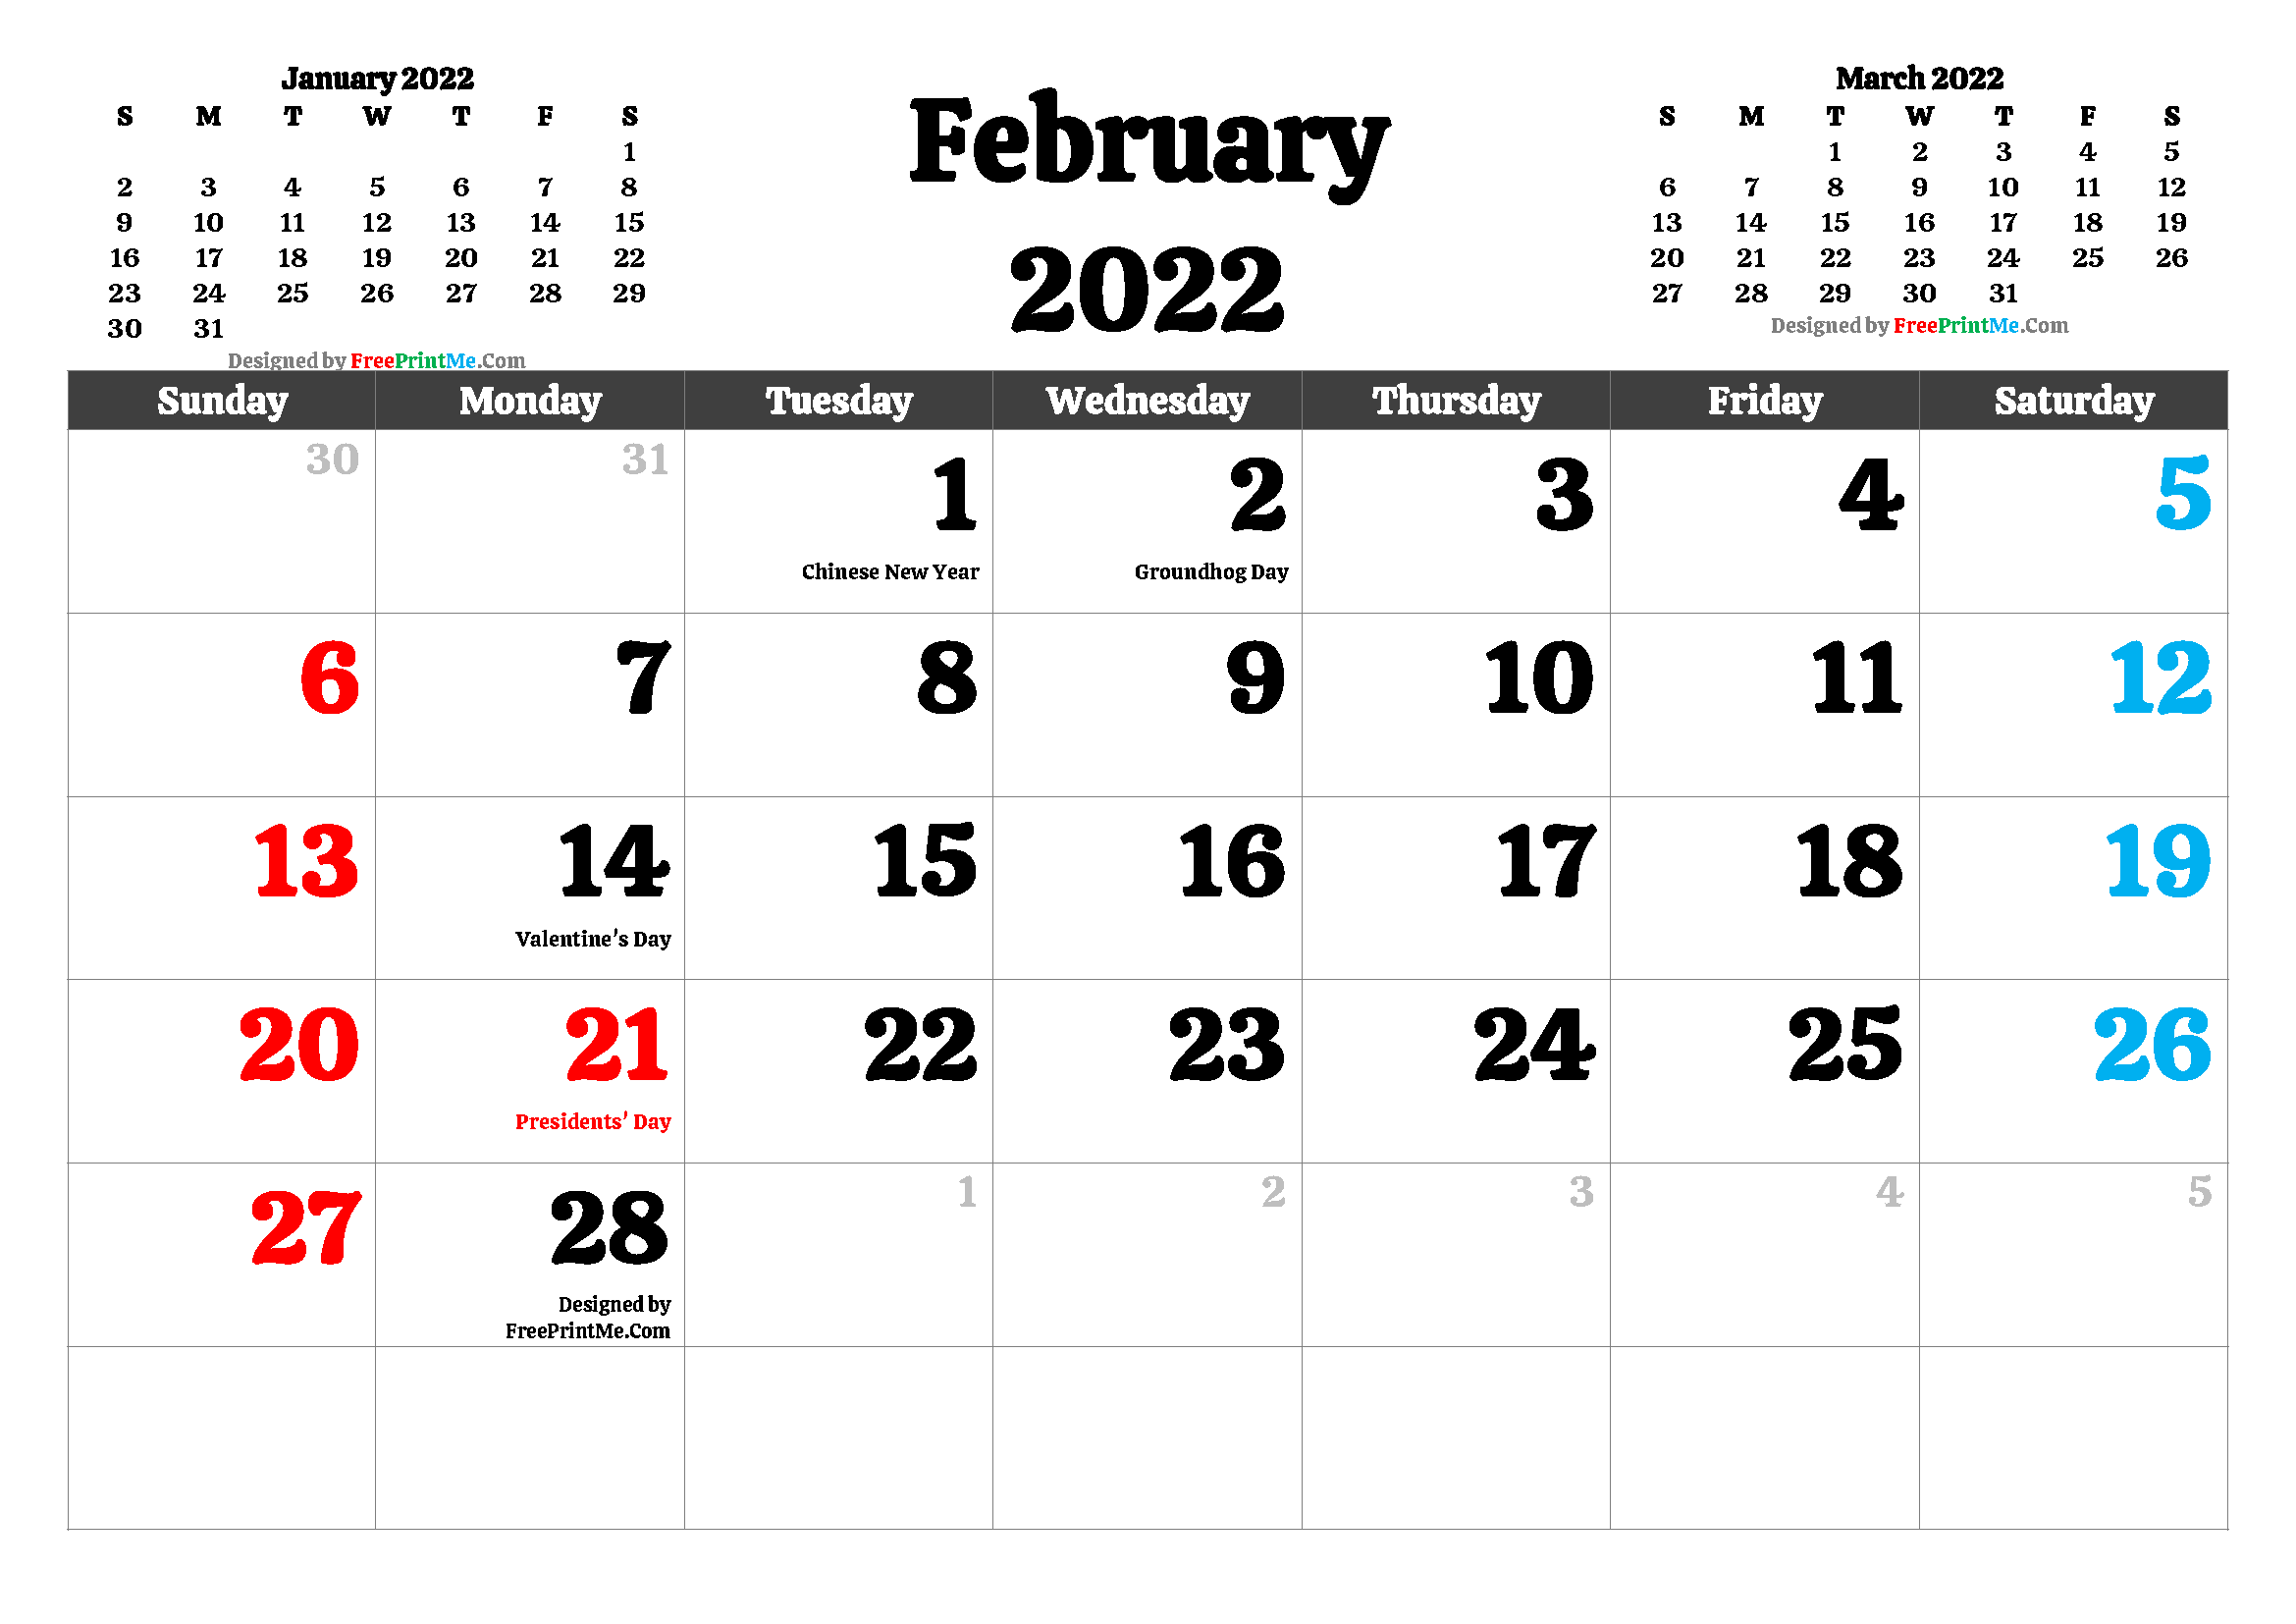 Febraury 2022 Calendar Free Printable February 2022 Calendar Pdf And Image